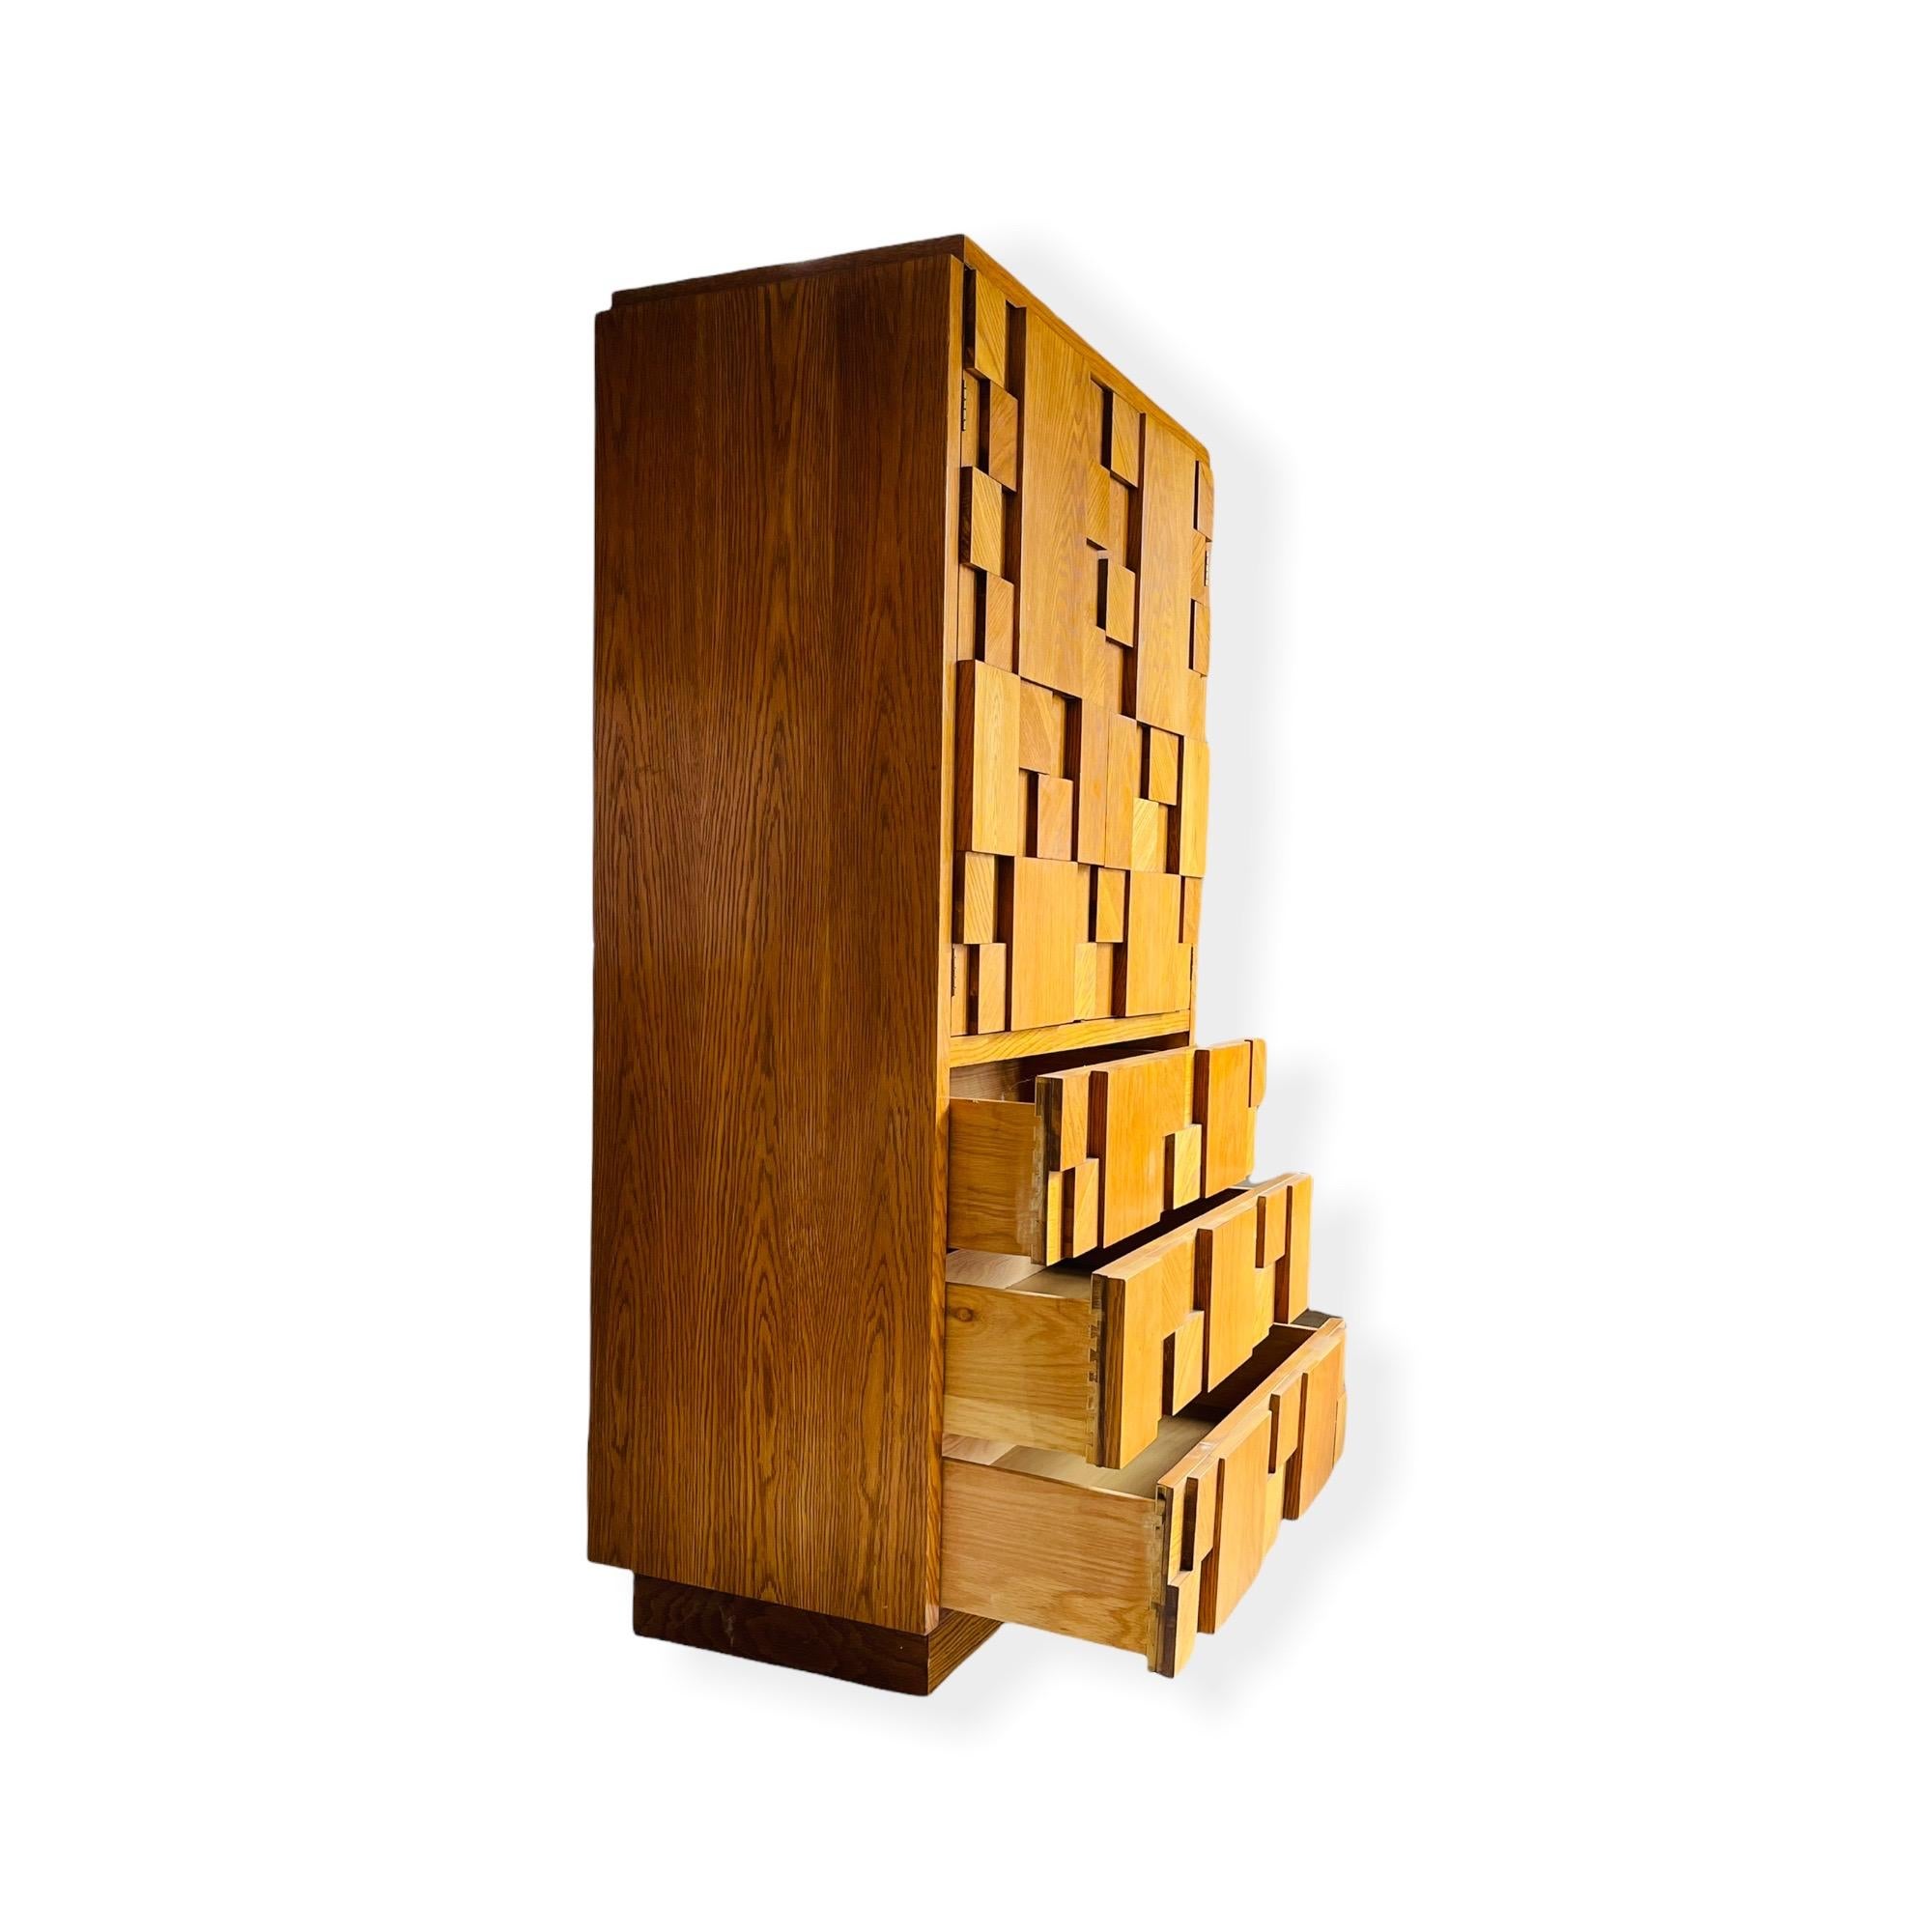 American Mid-Century Modern Brutalist Wood Block Cabinet by Lane Furniture